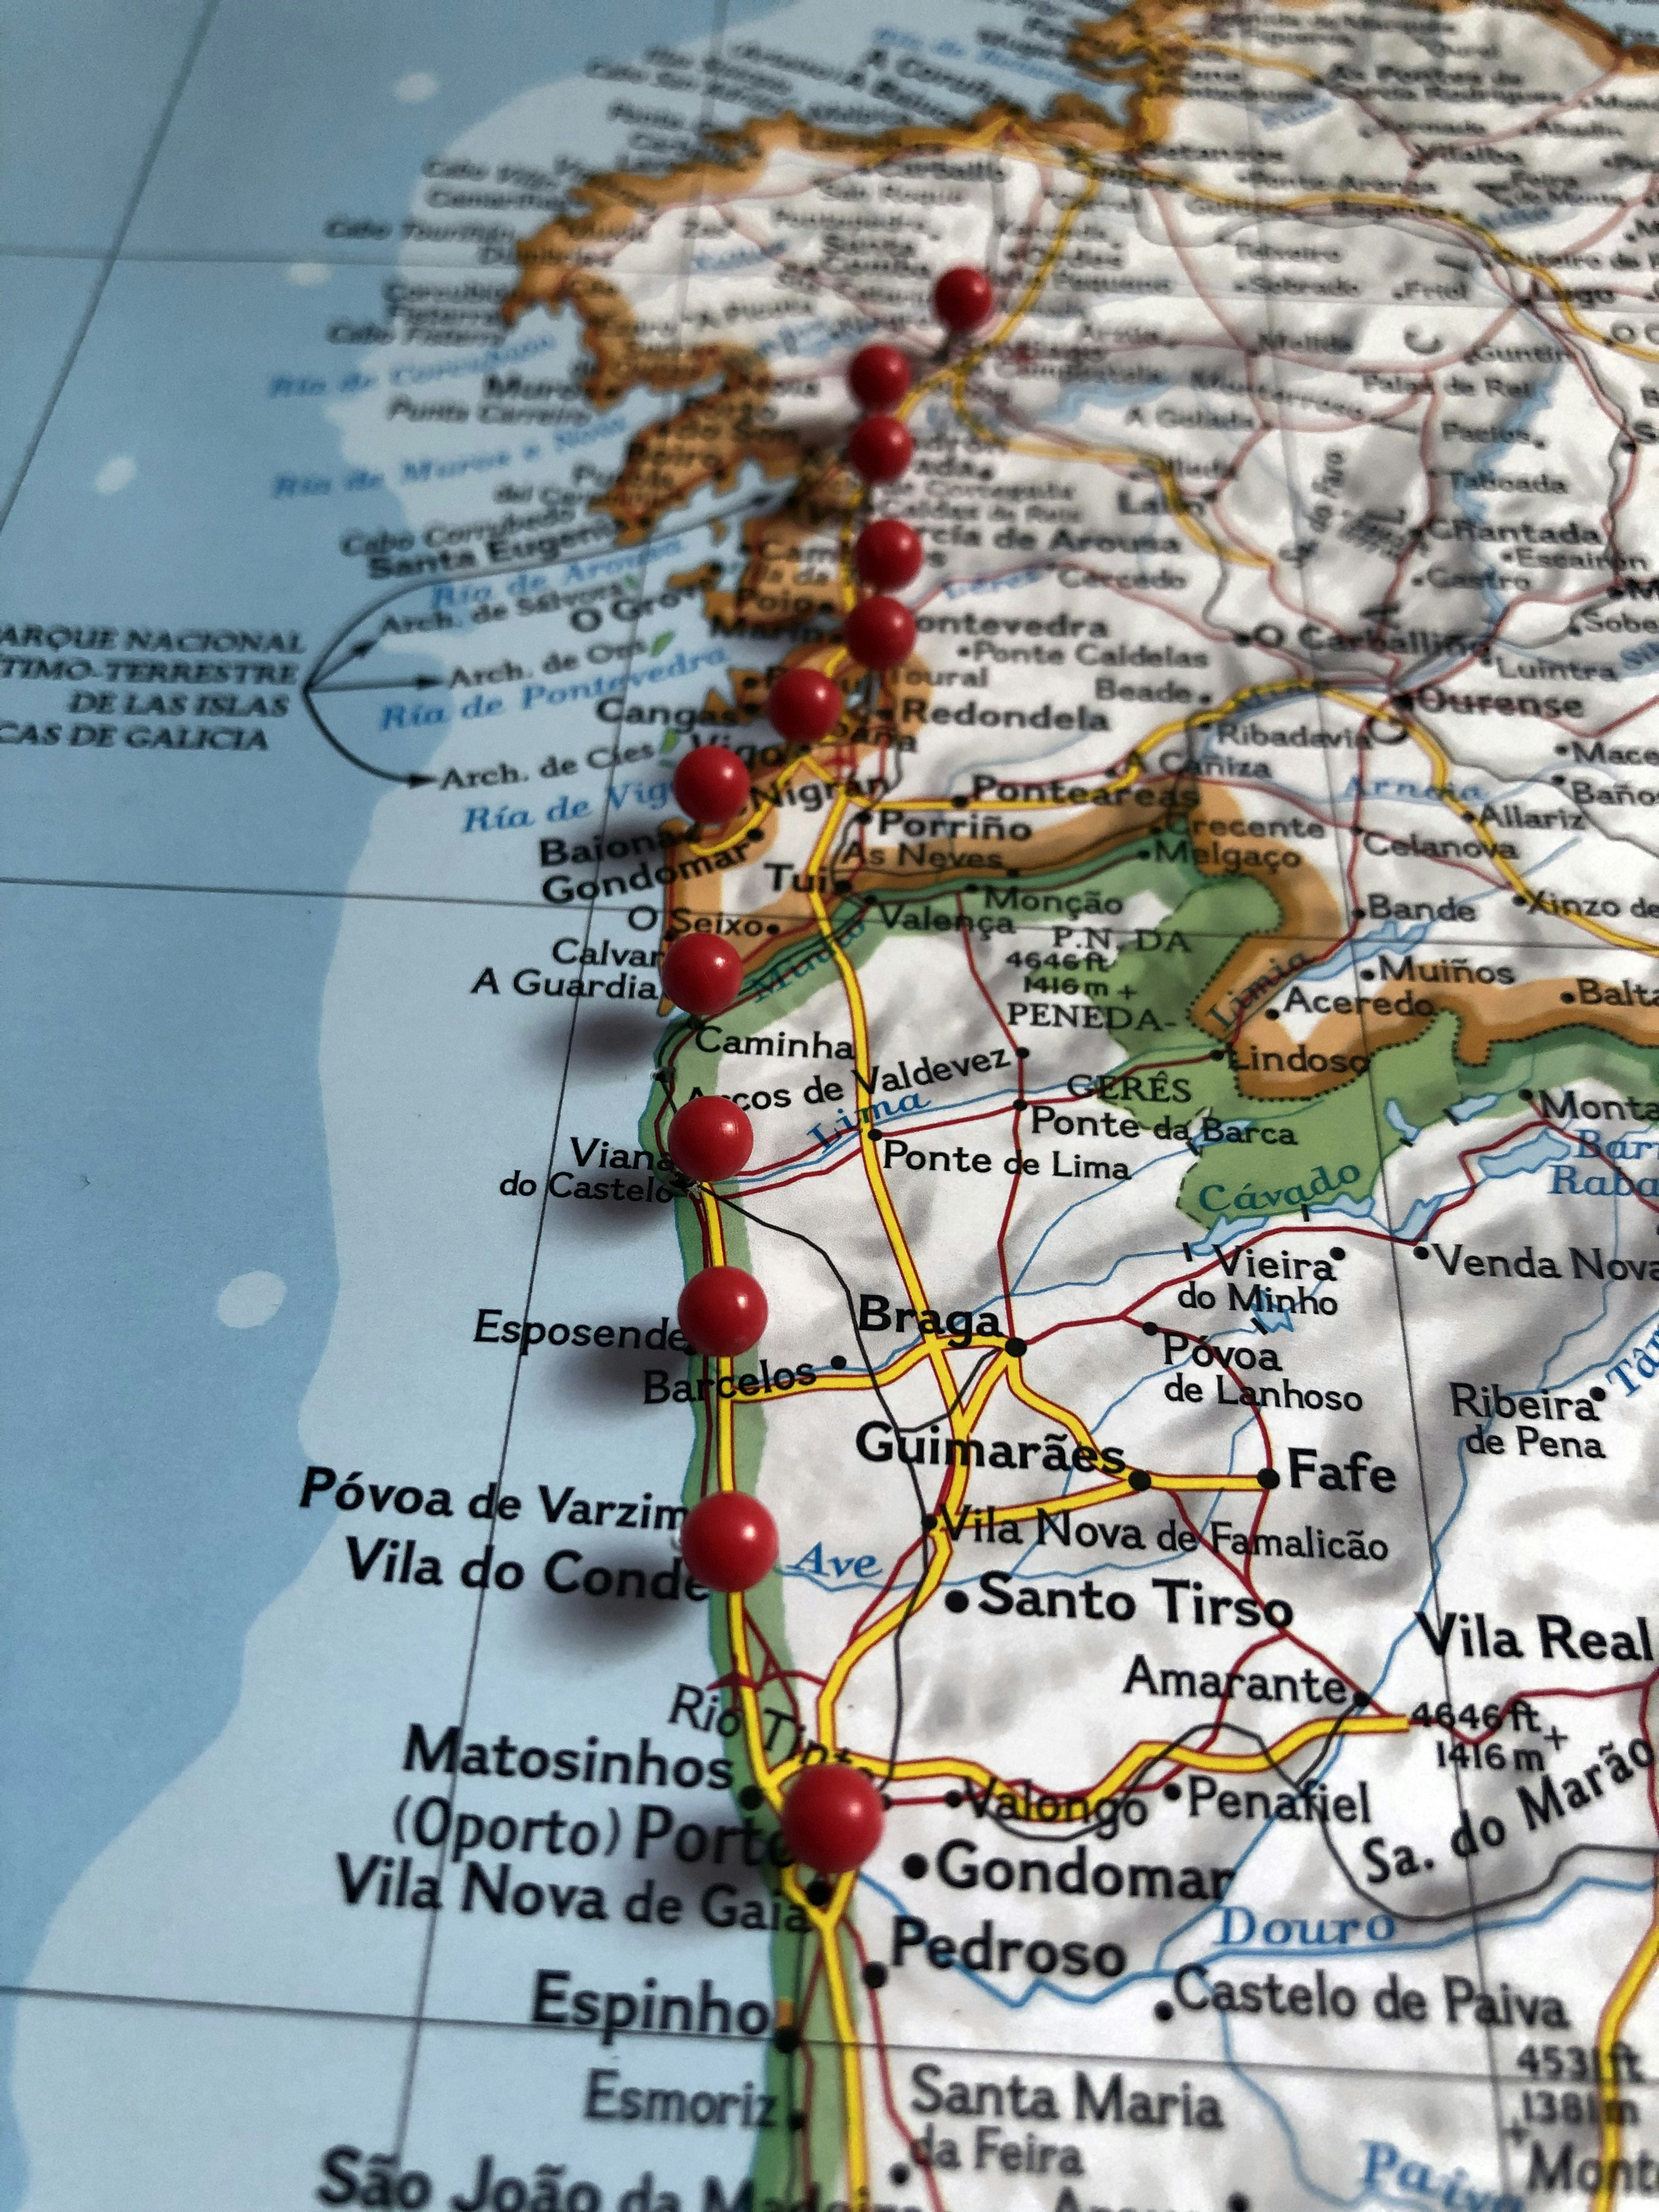 Portugal costal route for the Camino de Santiago.